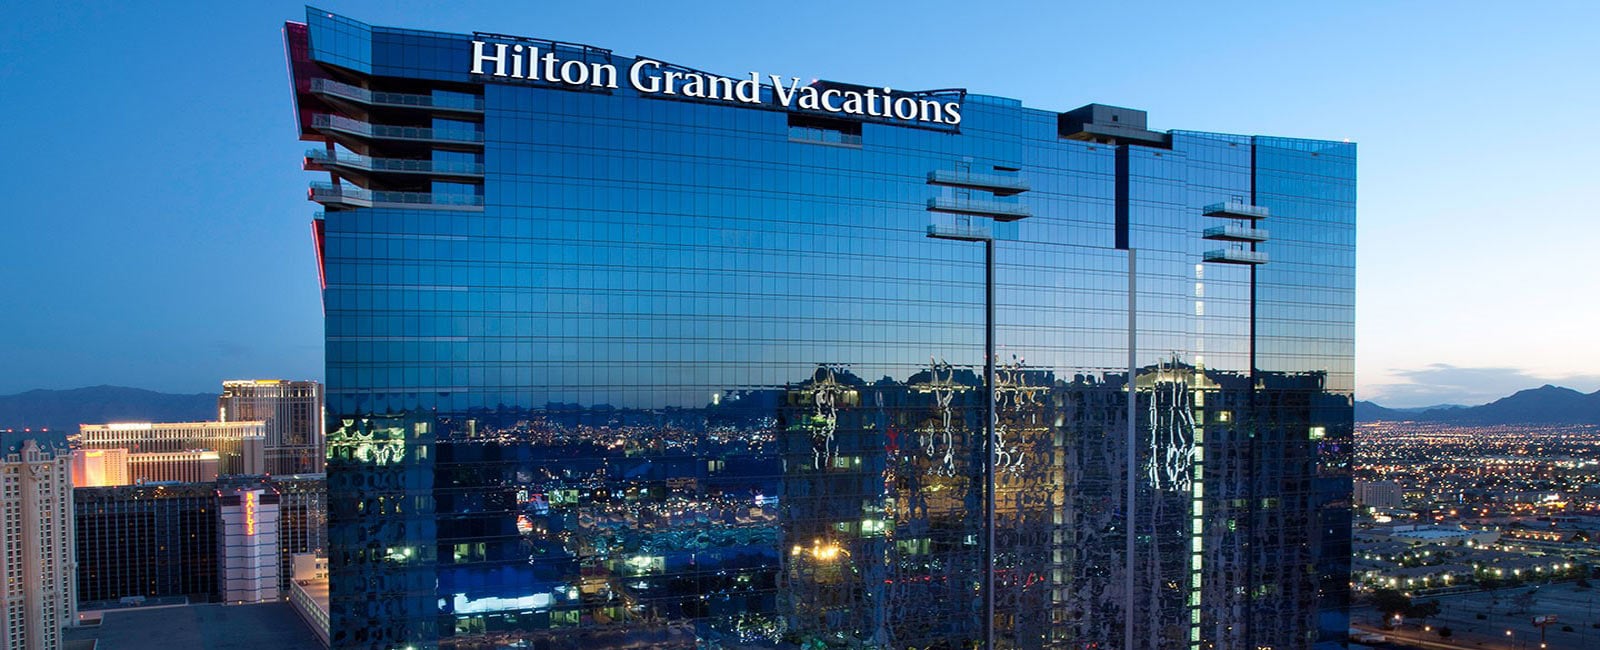 hilton grand elara vacations timeshare vegas las nevada presentation hgvc club resort courtesy resorts points instagram